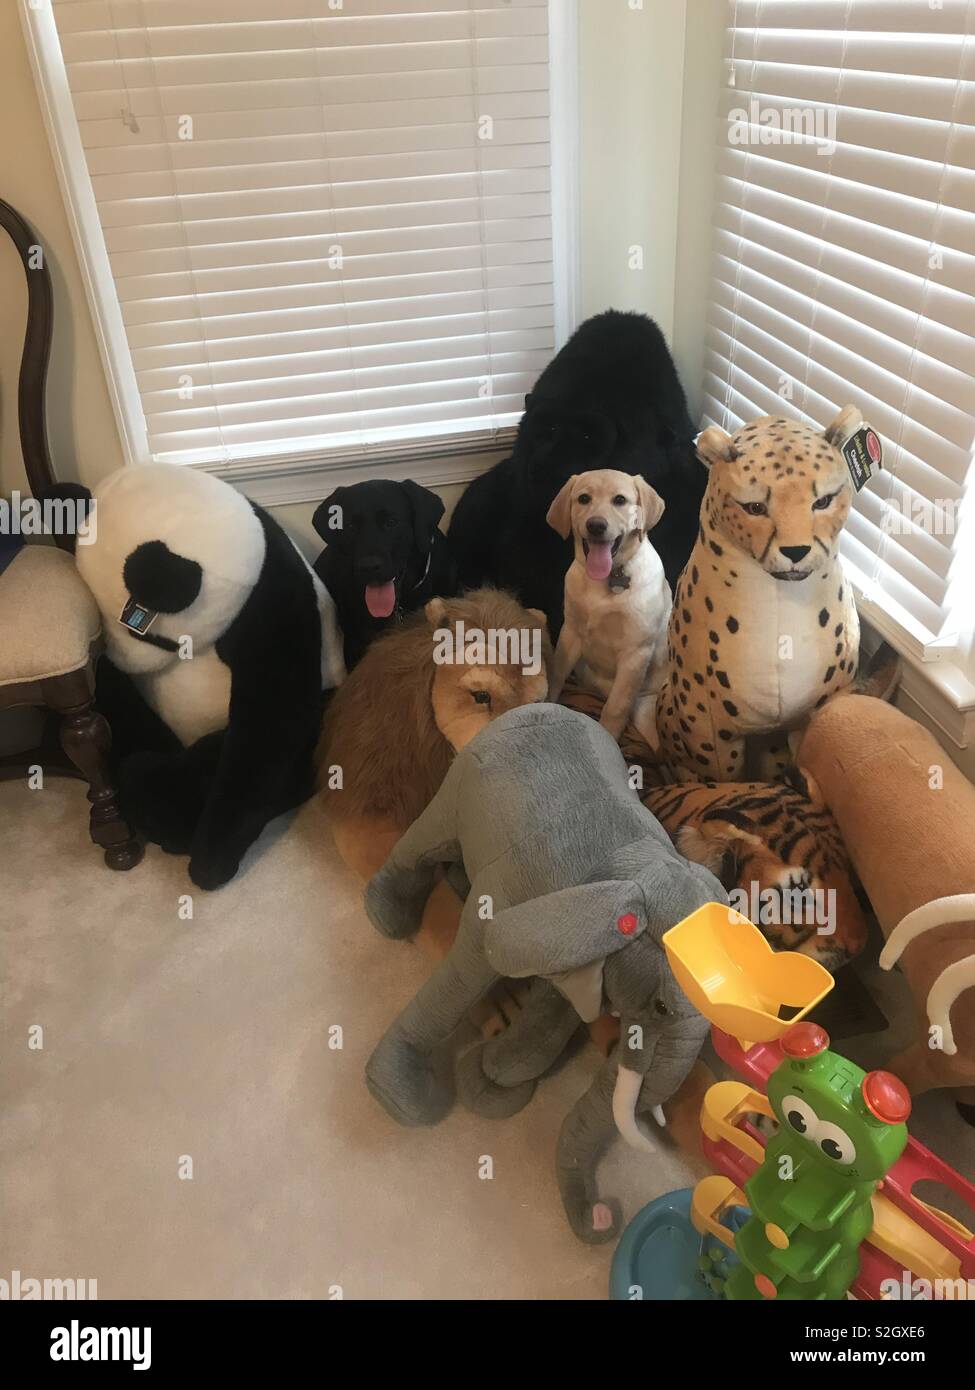 Labrador retrievers hiding in the stuffed animals Stock Photo